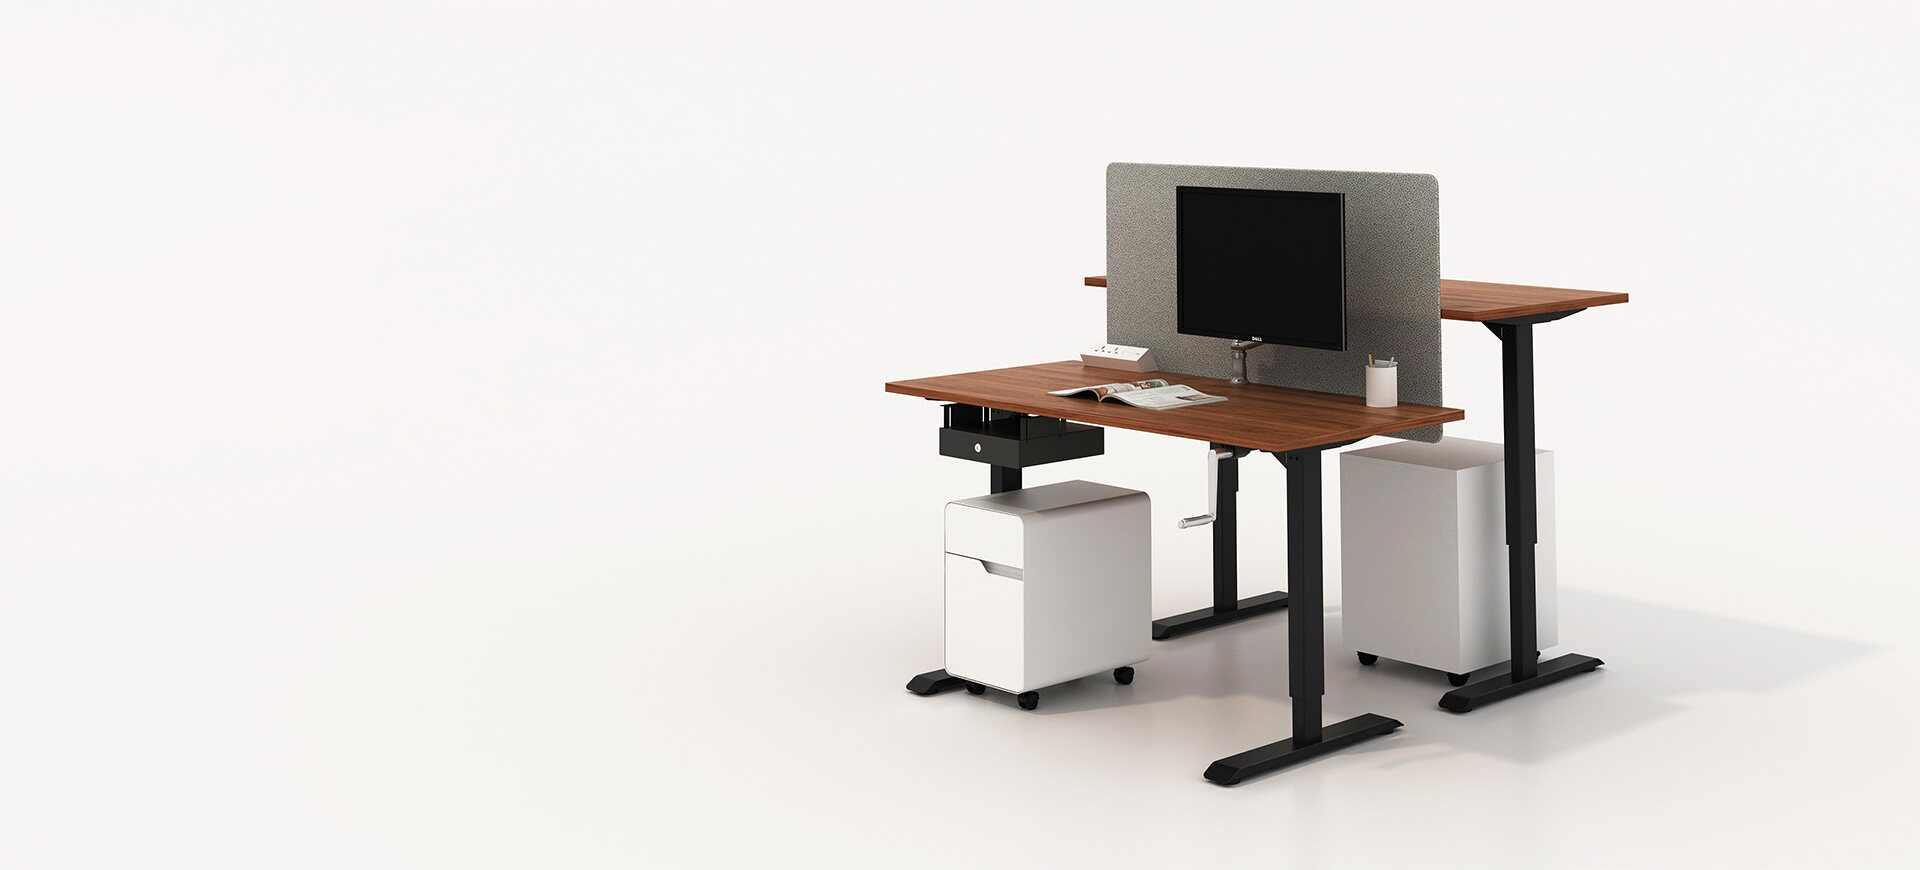 Cranked height adjustable table,single desk,manual sit stand desk